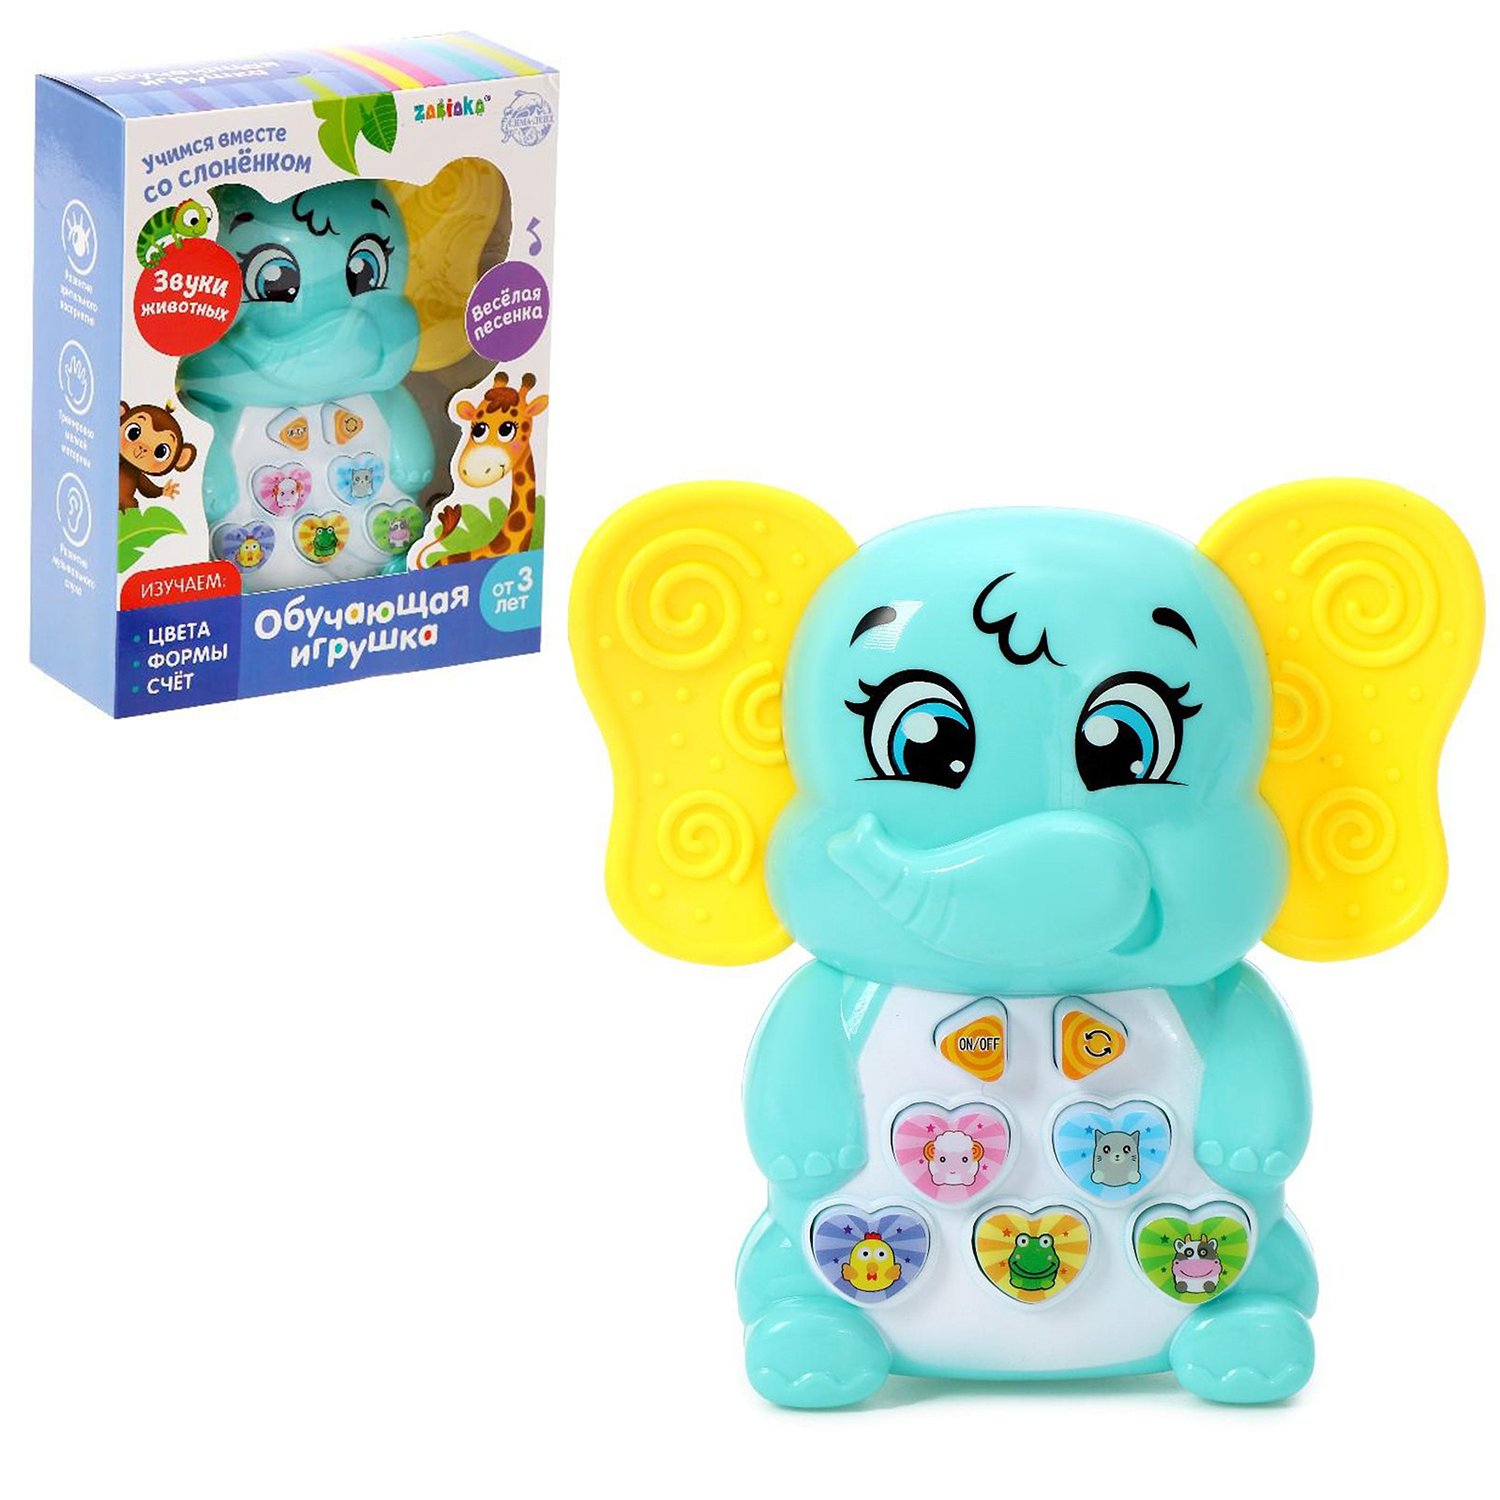 Развивающая игрушка ZABIAKA Zabiaka, Милый слоник, звук развивающая игрушка zabiaka в поисках подарков 4848773